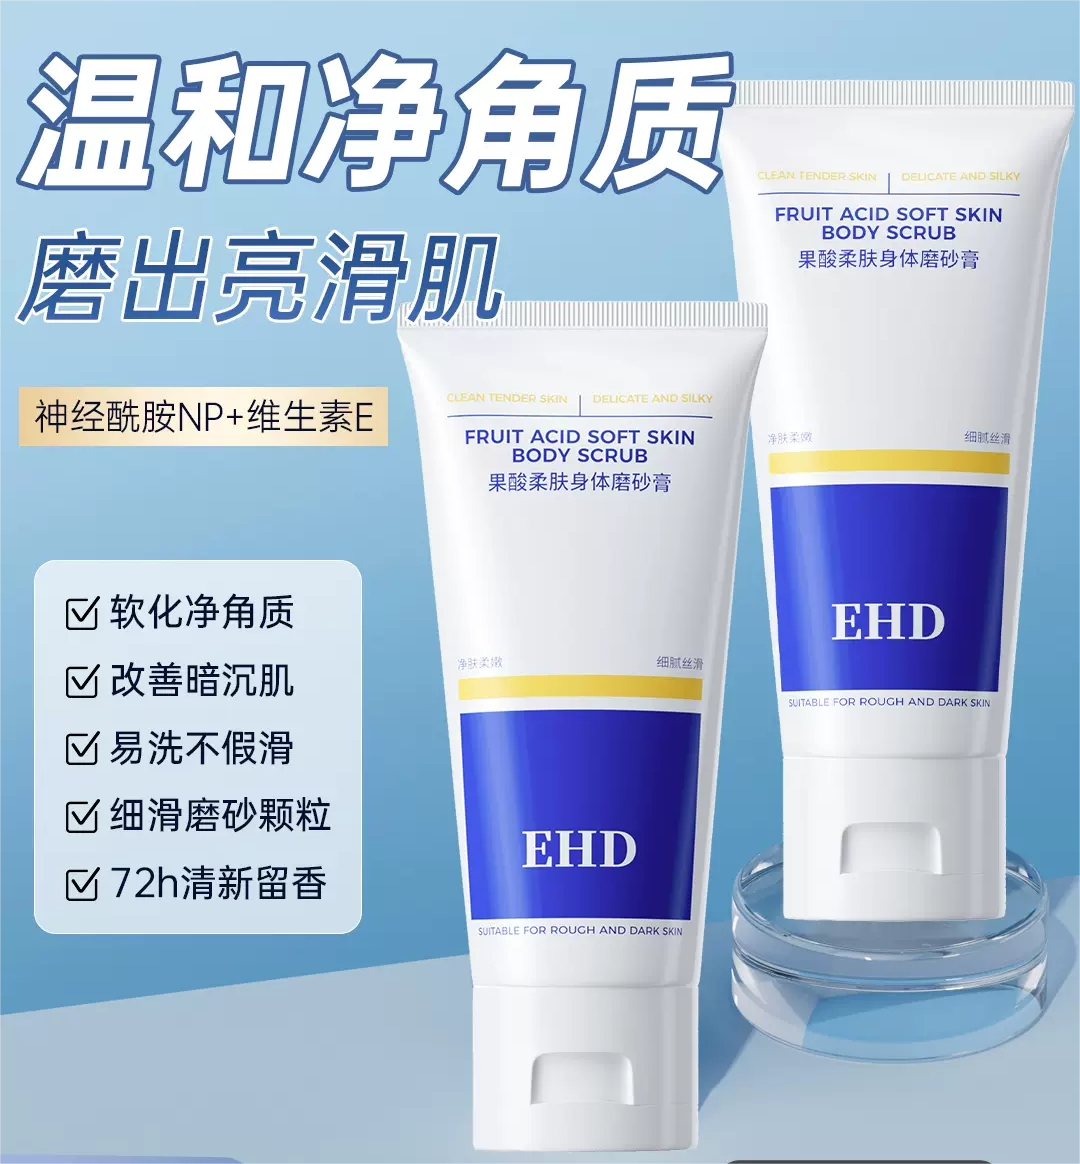 EHD AHA Soft Skin Body Scrub 200g EHD果酸柔肤身体磨砂膏